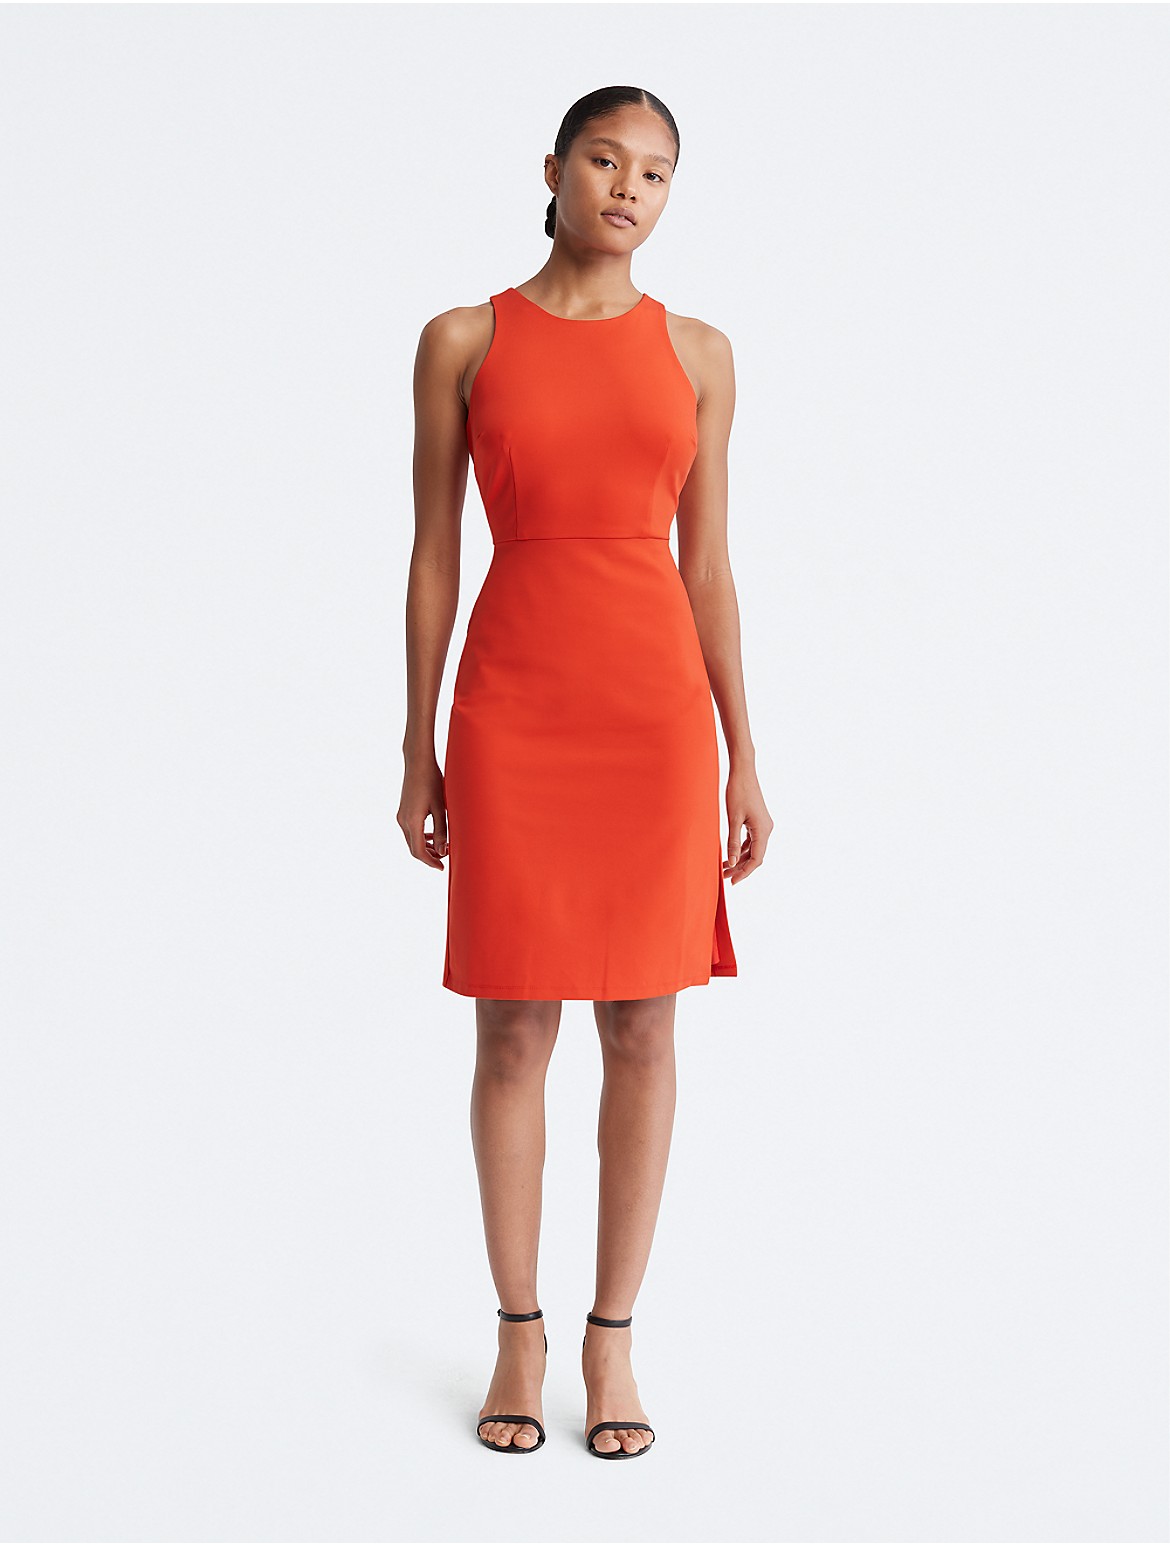 Calvin Klein Women's Halter Sheath Dress - Orange - 14